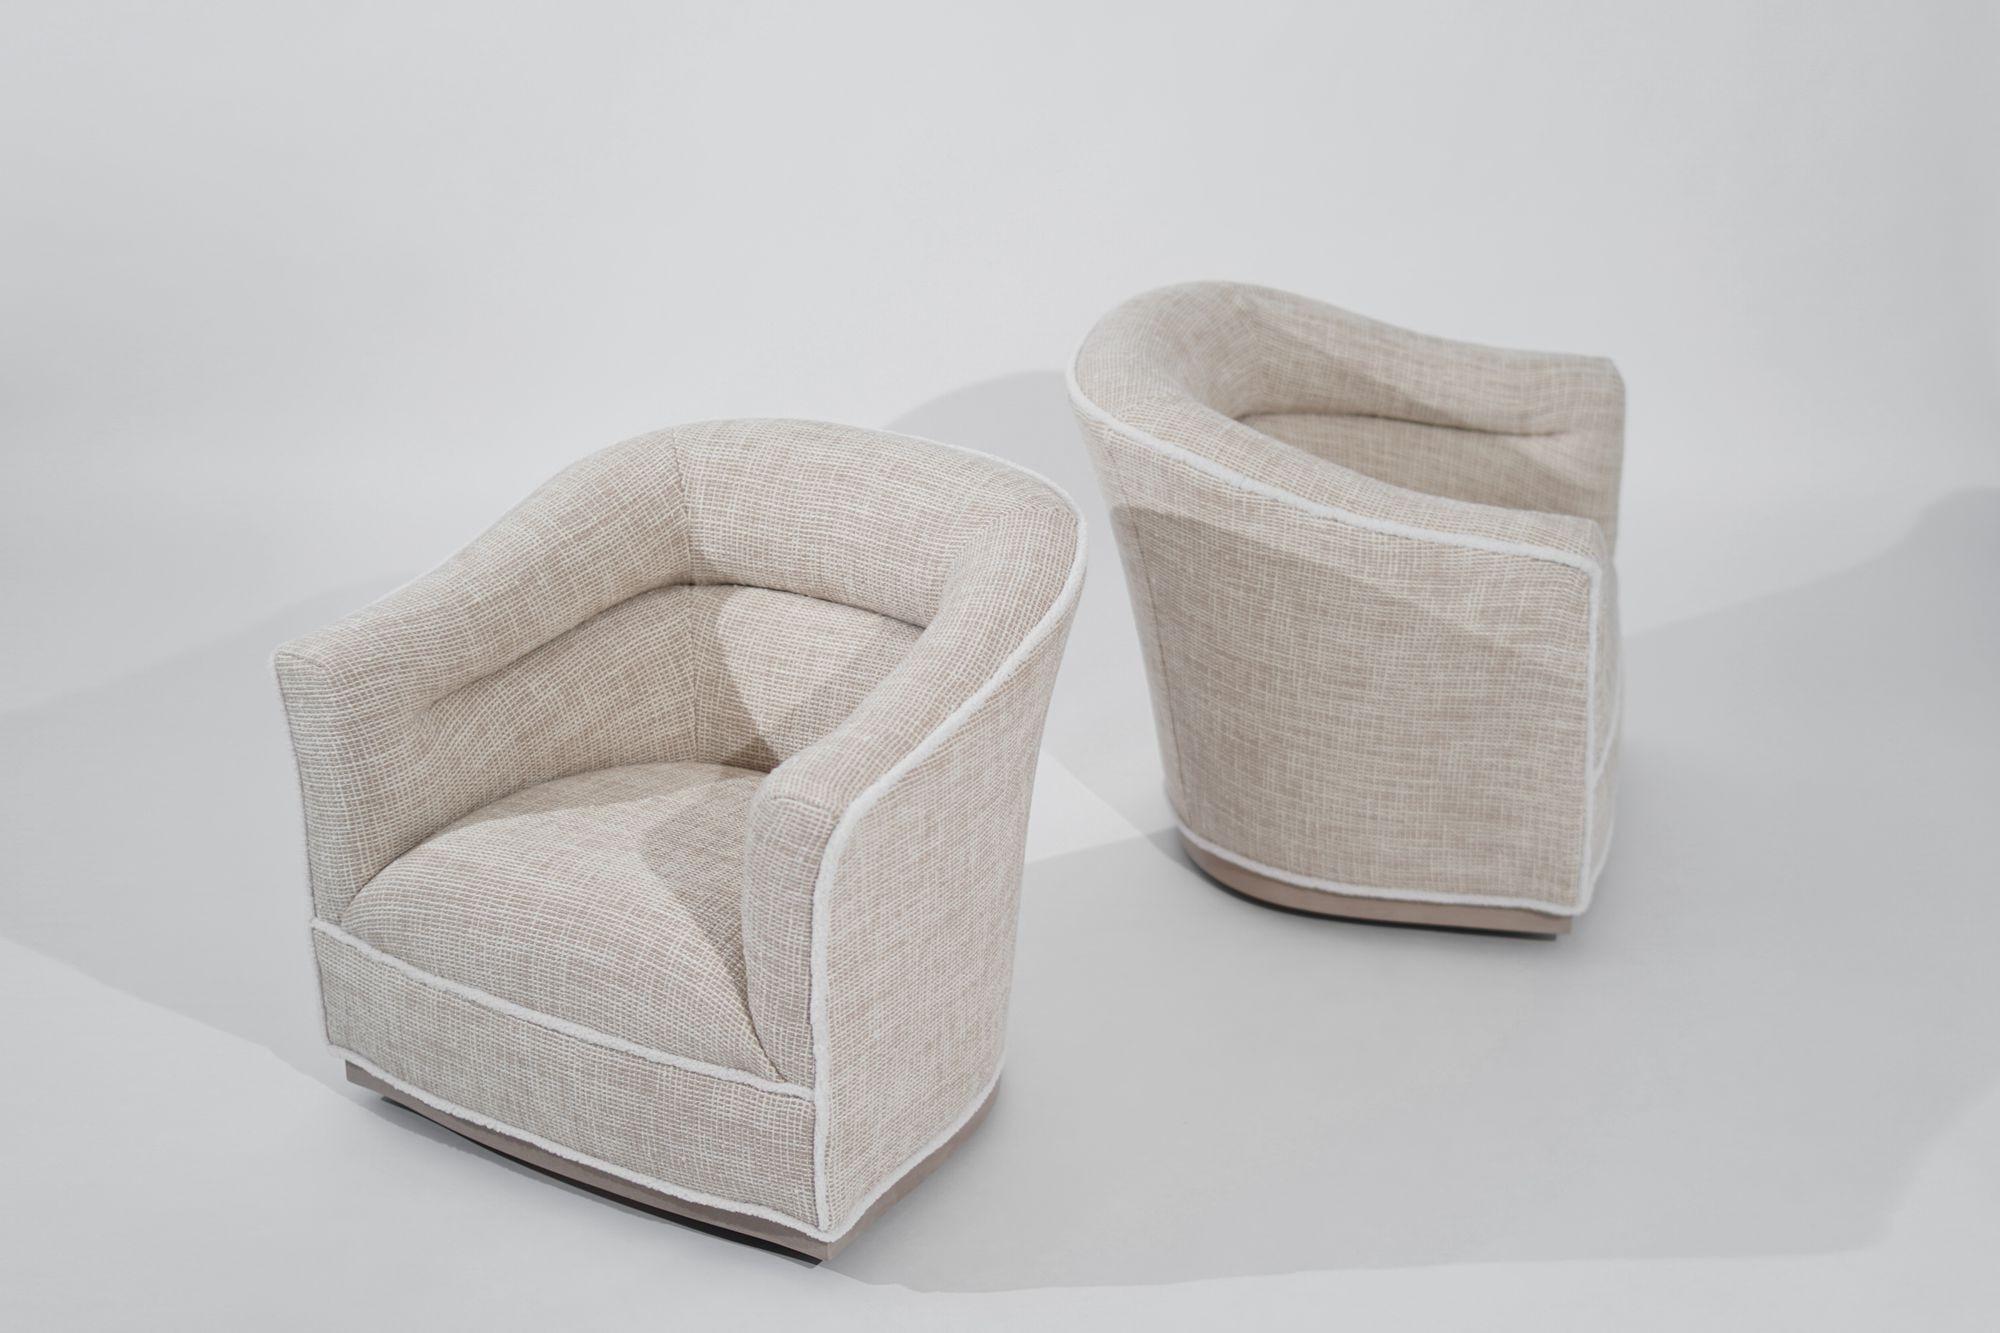 20th Century Scandinavian-Modern Swivel Chairs, Sweden, C. 1950s For Sale